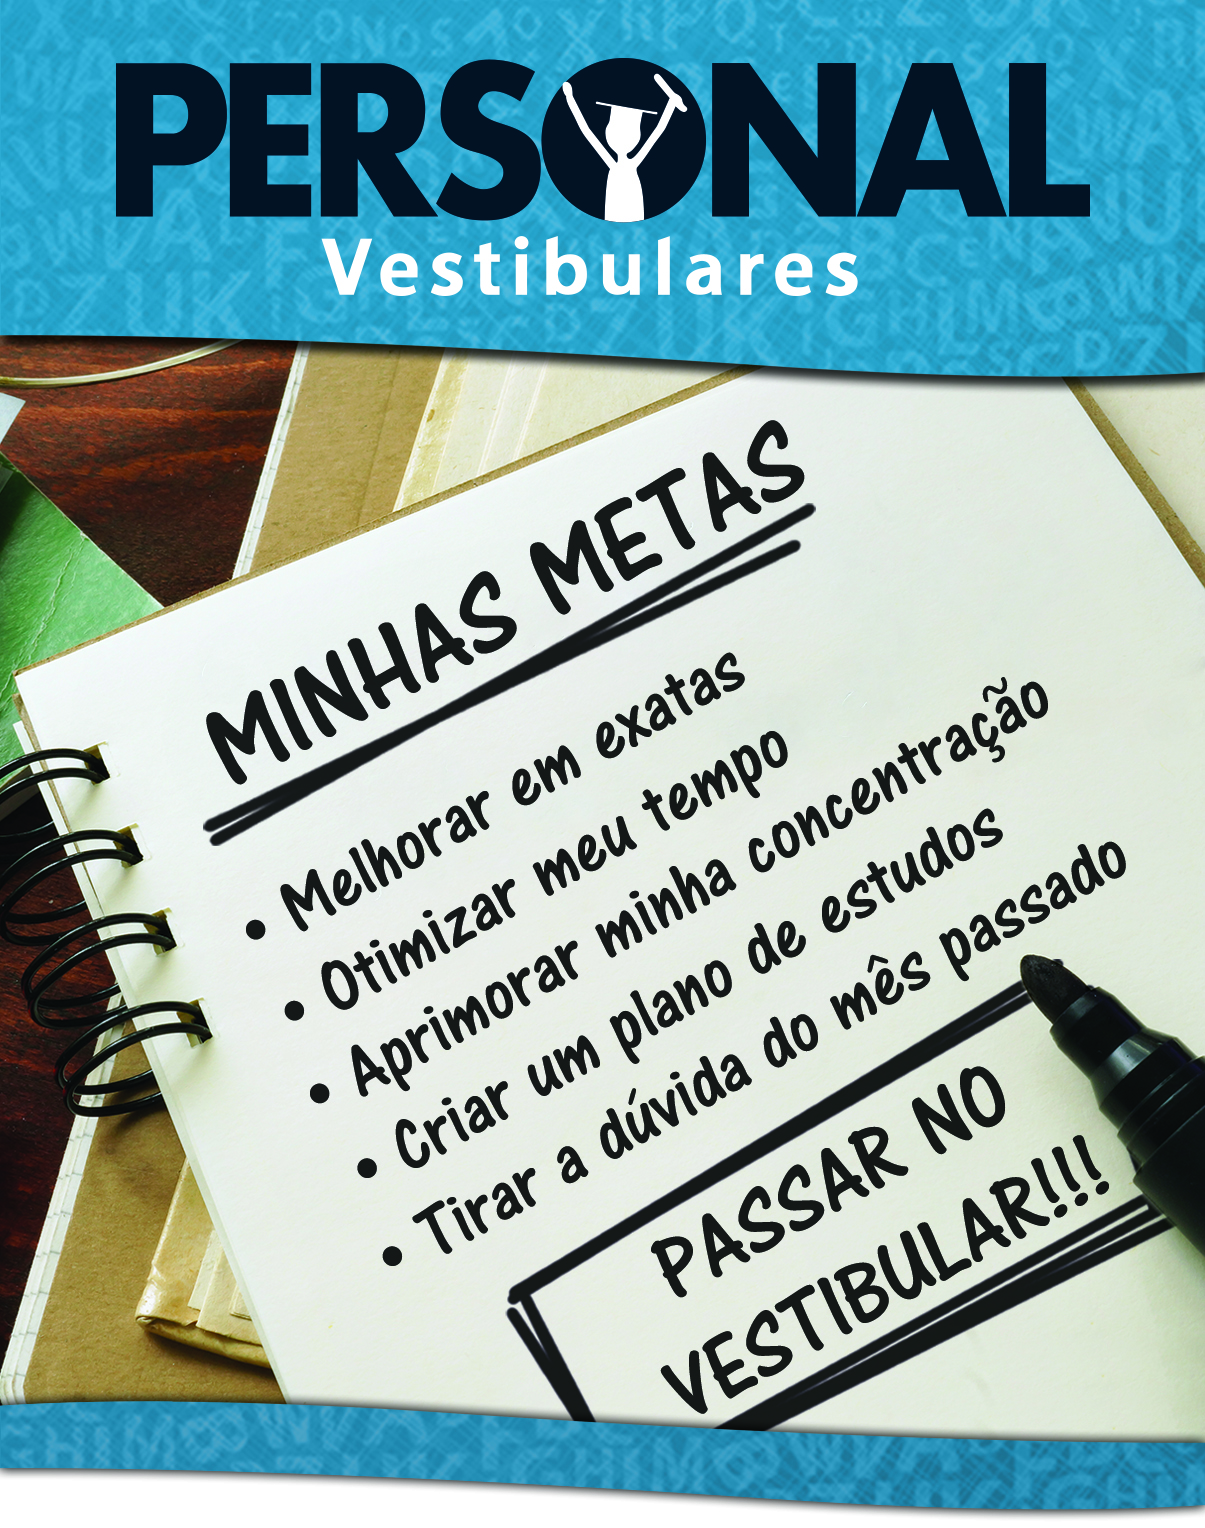 Personal Vestibulares - Coaching Educacional em So Paulo